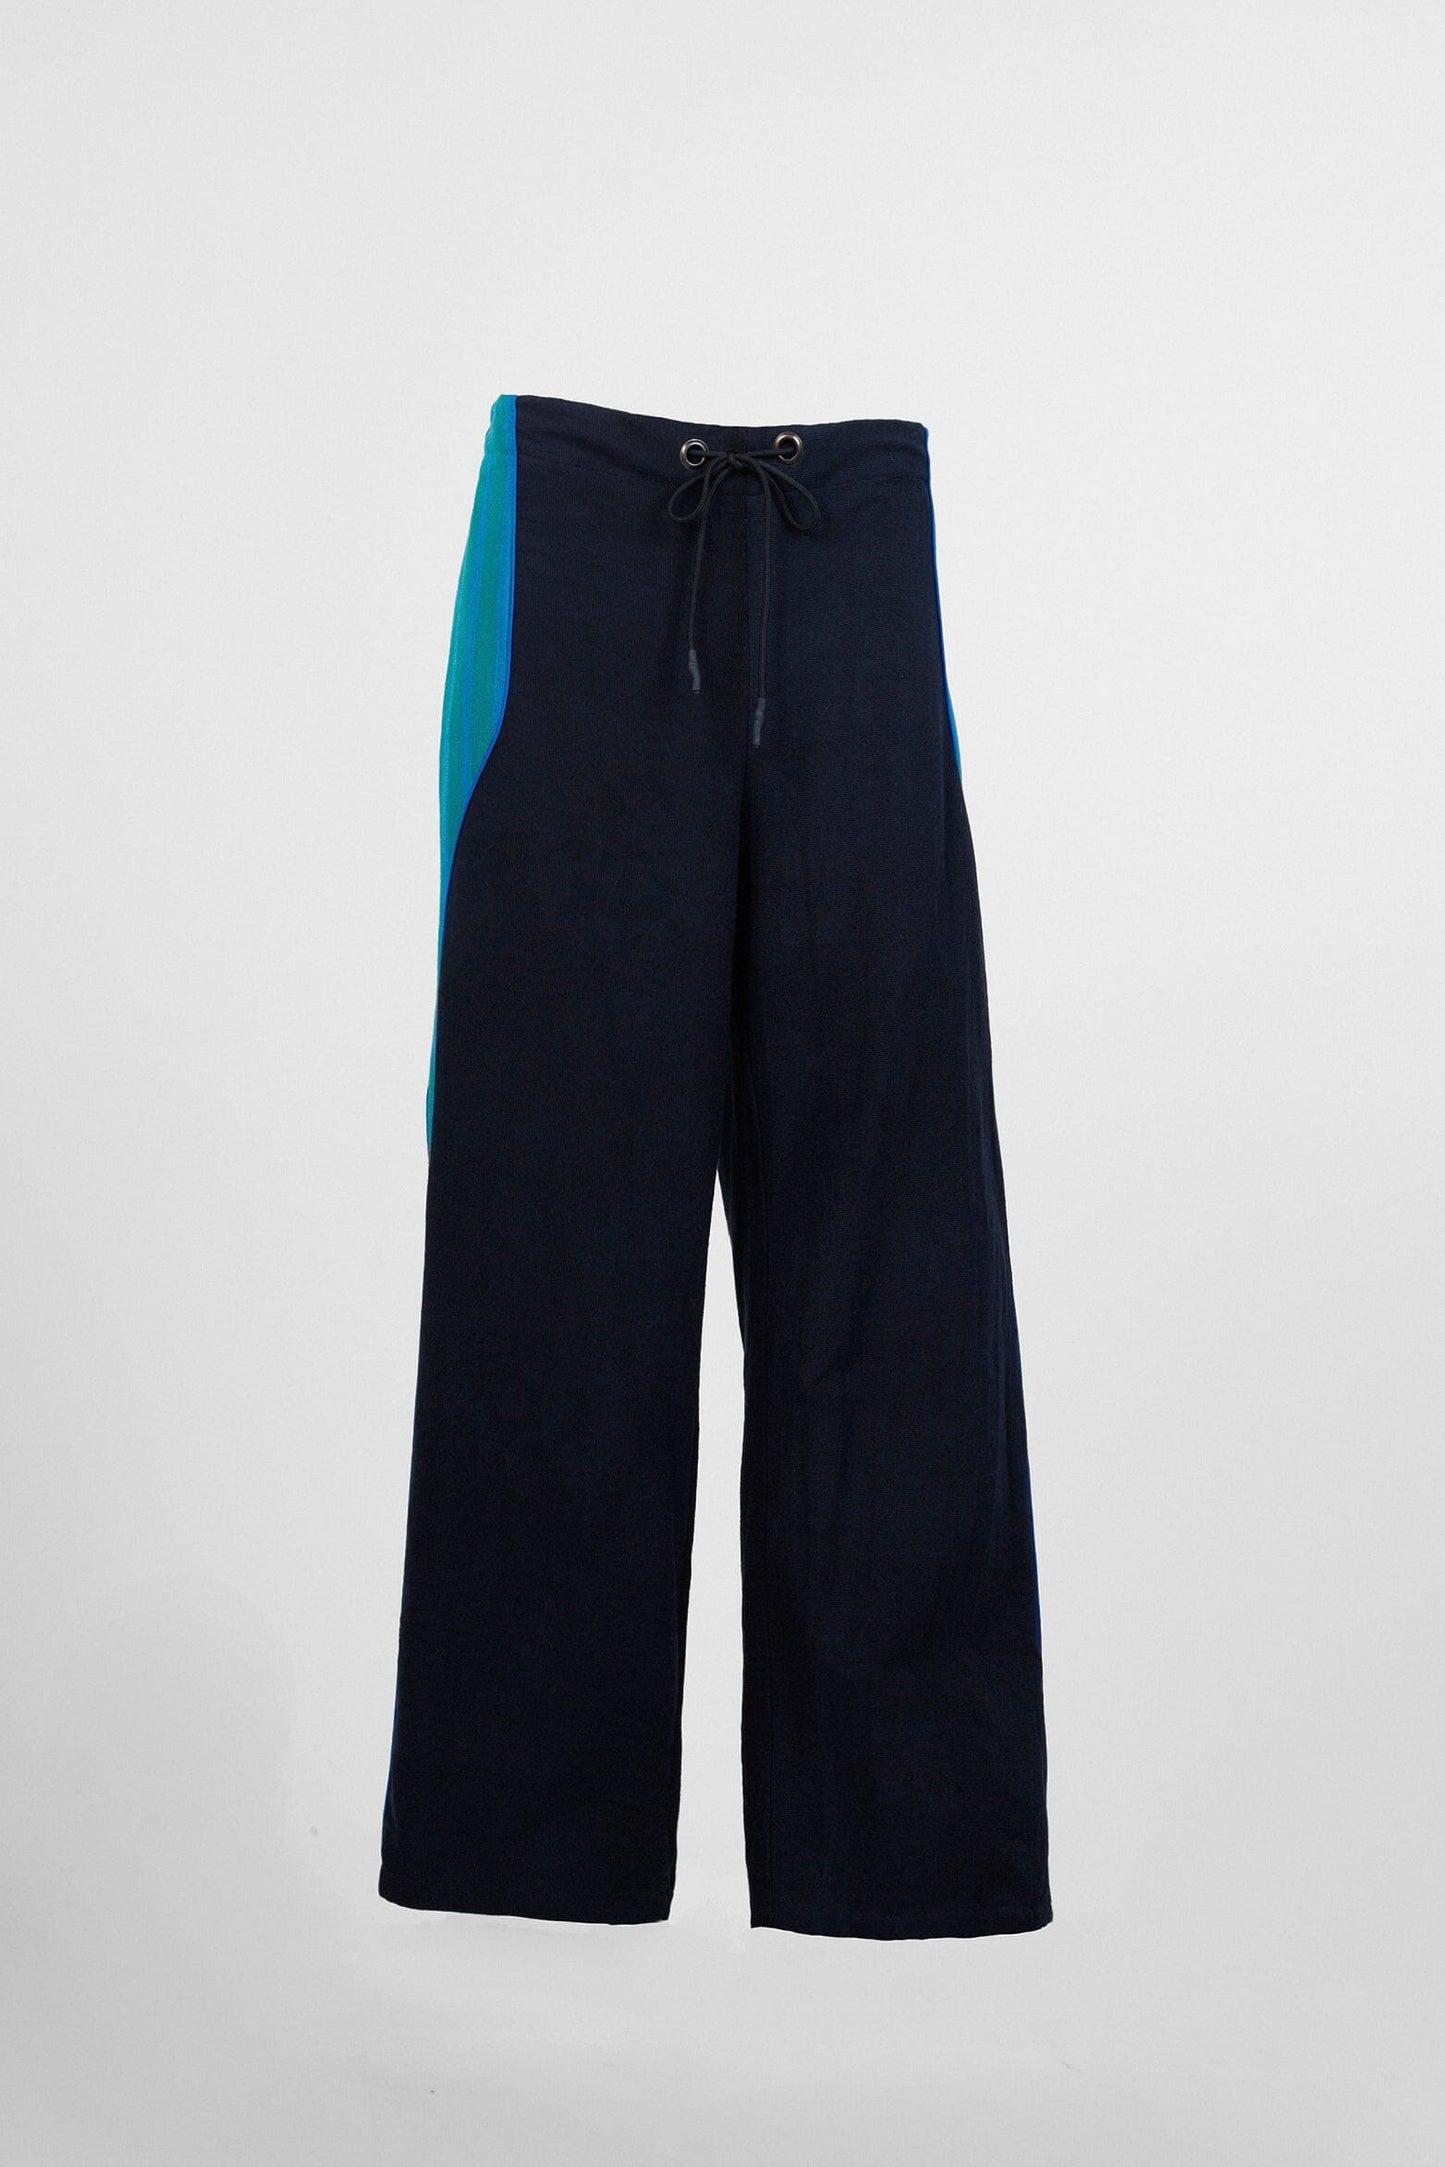 Panelled Judo Pants • Black Trousers New LaurenceAirline 